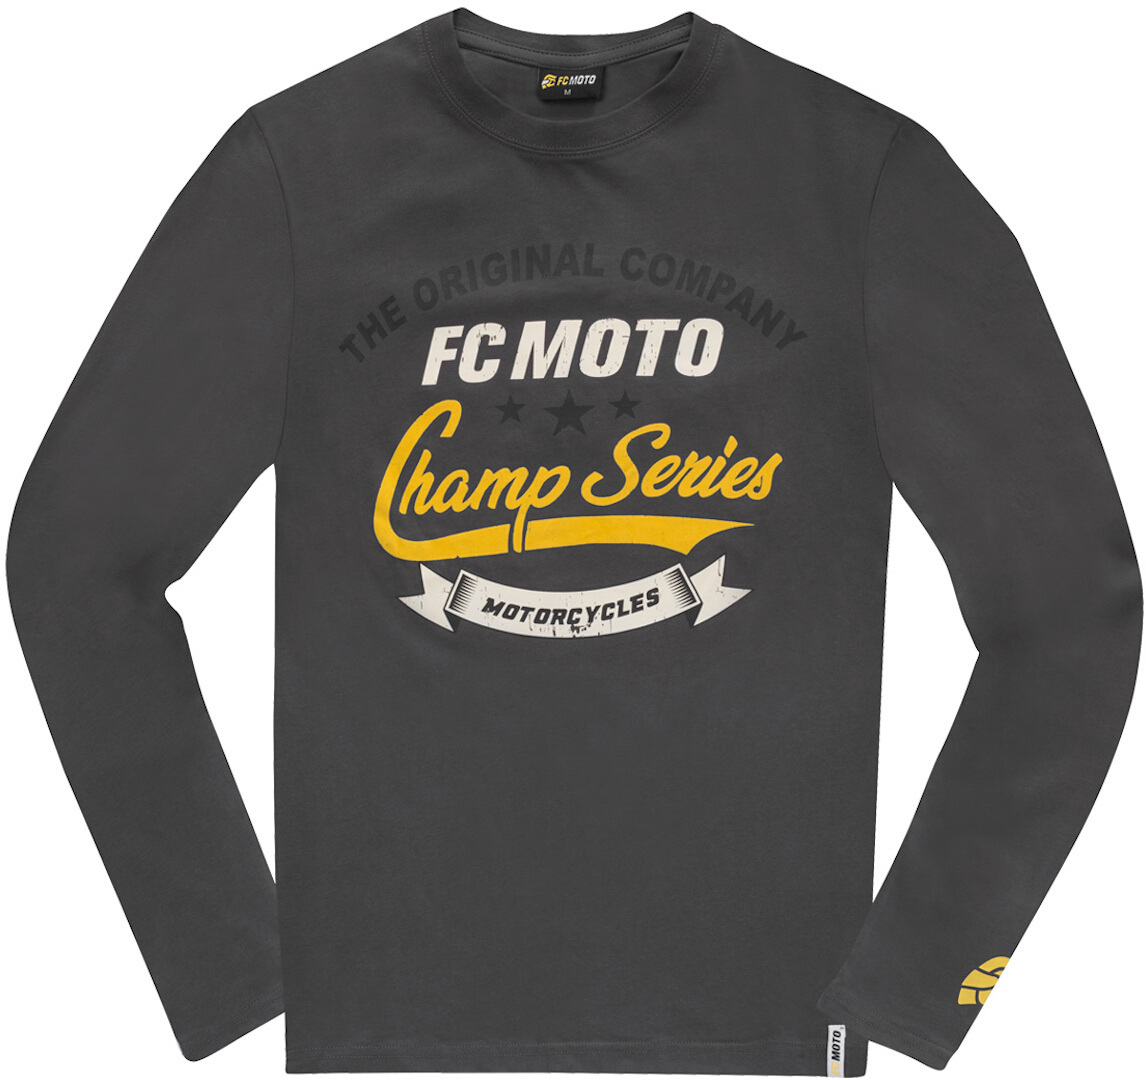 Рубашка FC-Moto Champ Series с длинными рукавами, темно-синий рубашка из джерси с длинными рукавами s синий